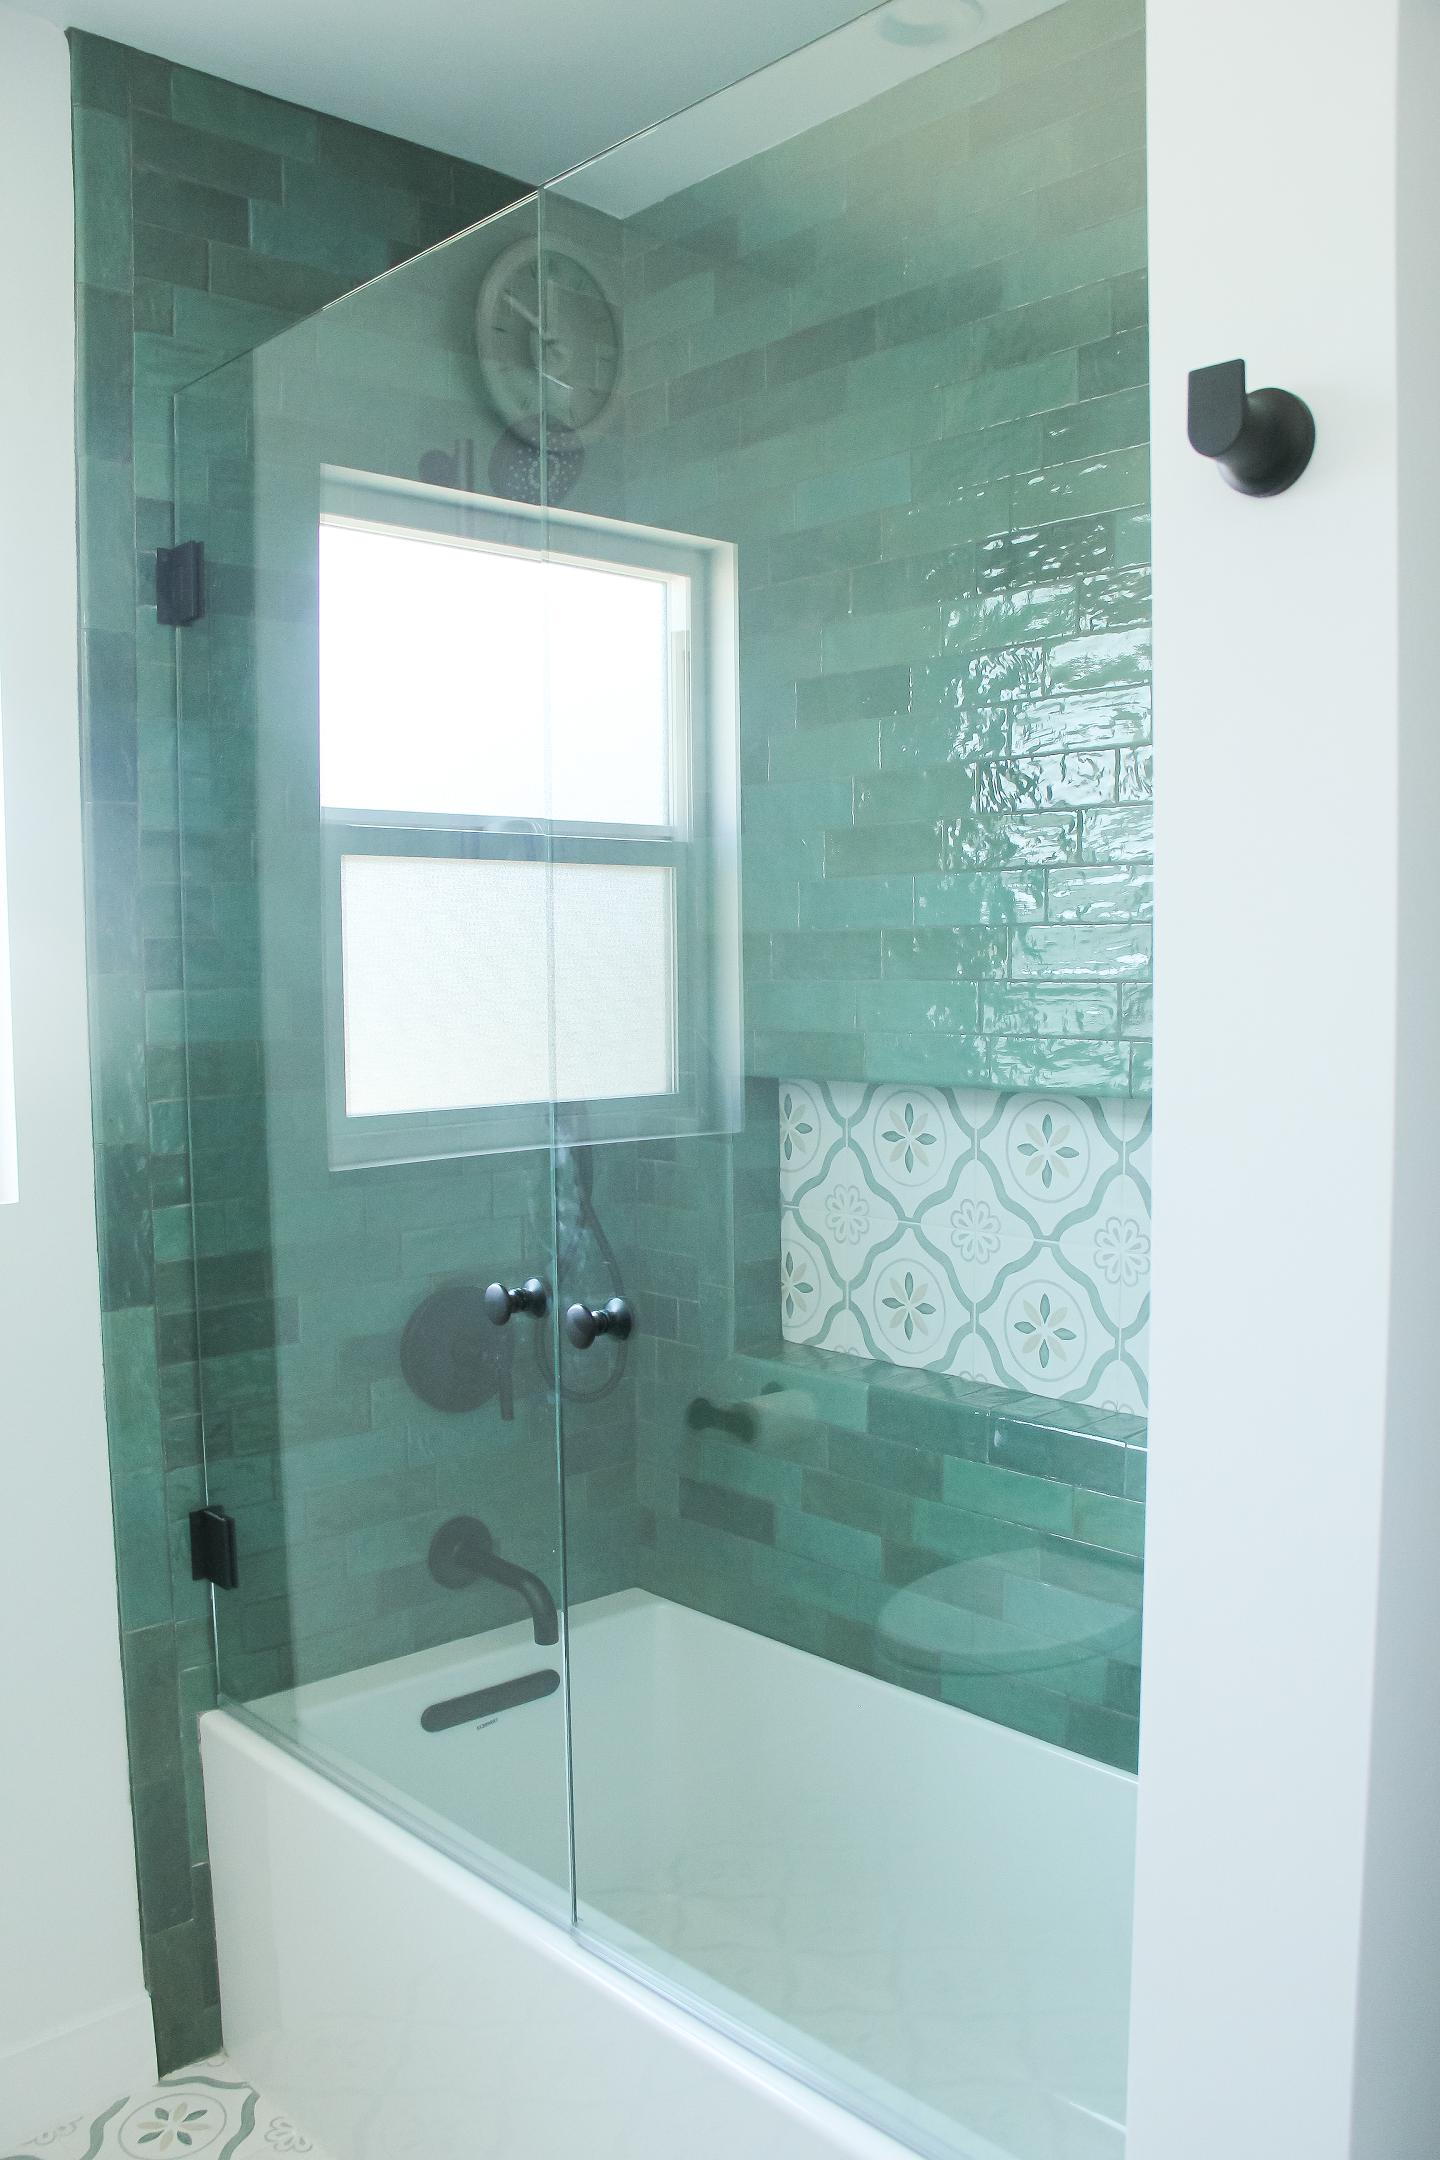 Modern bathroom with green tile shower enclosure.